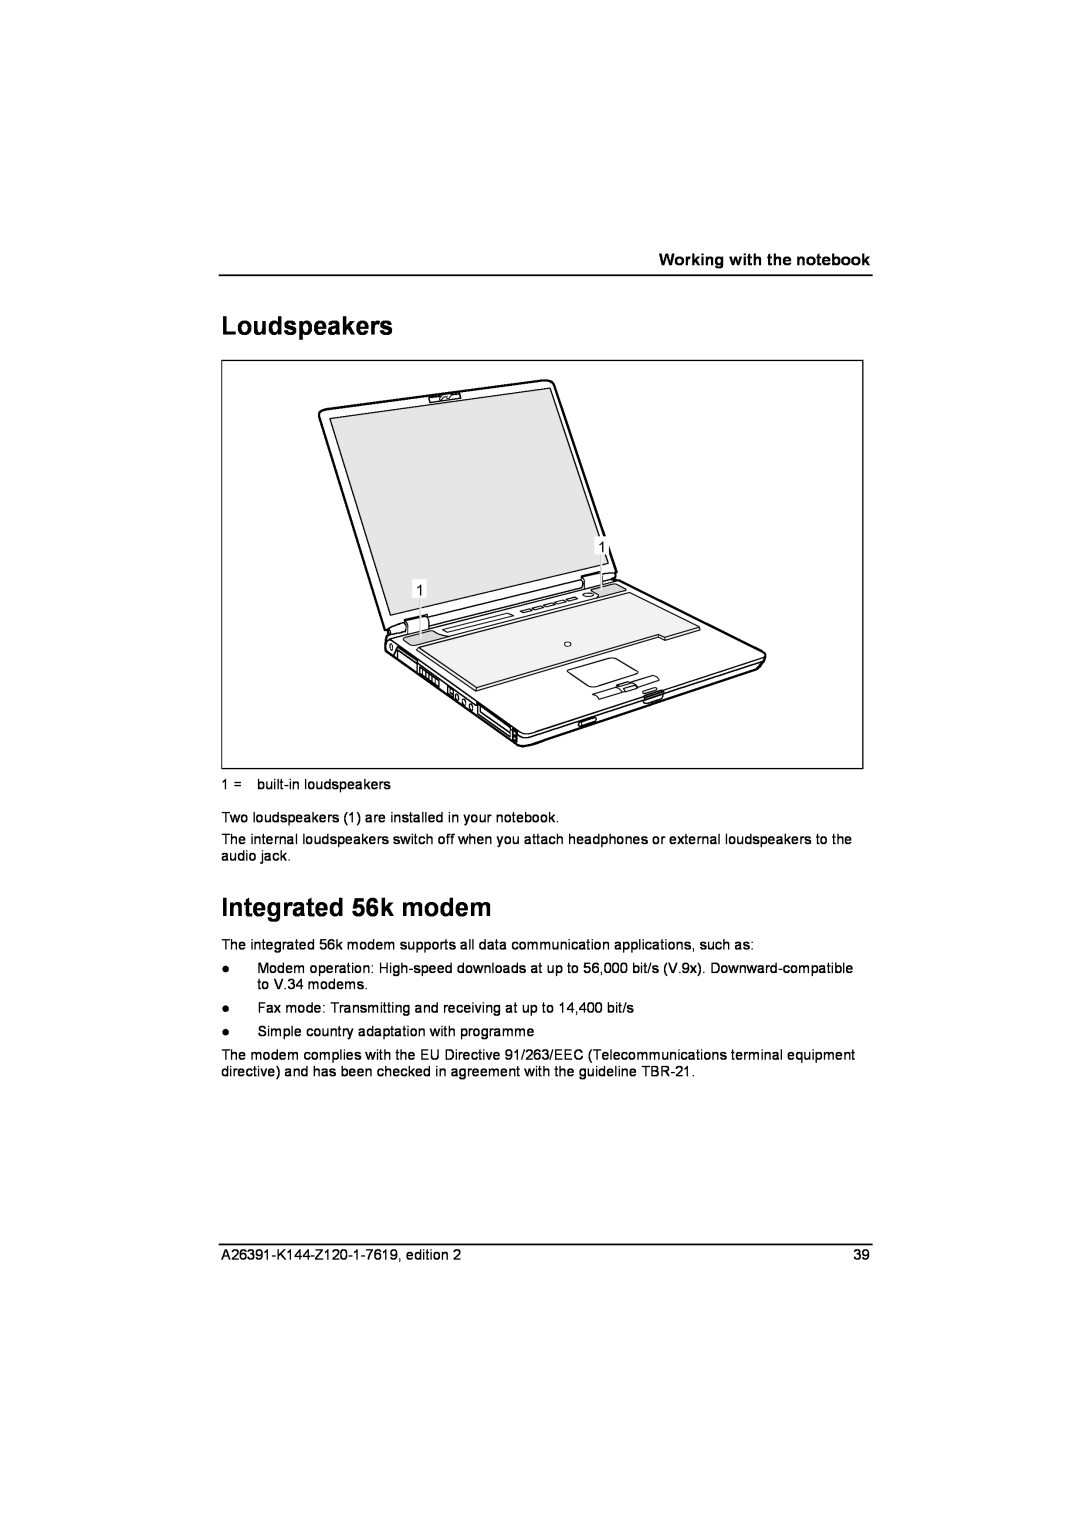 Fujitsu S SERIES manual Integrated 56k modem, Loudspeakers, Working with the notebook 